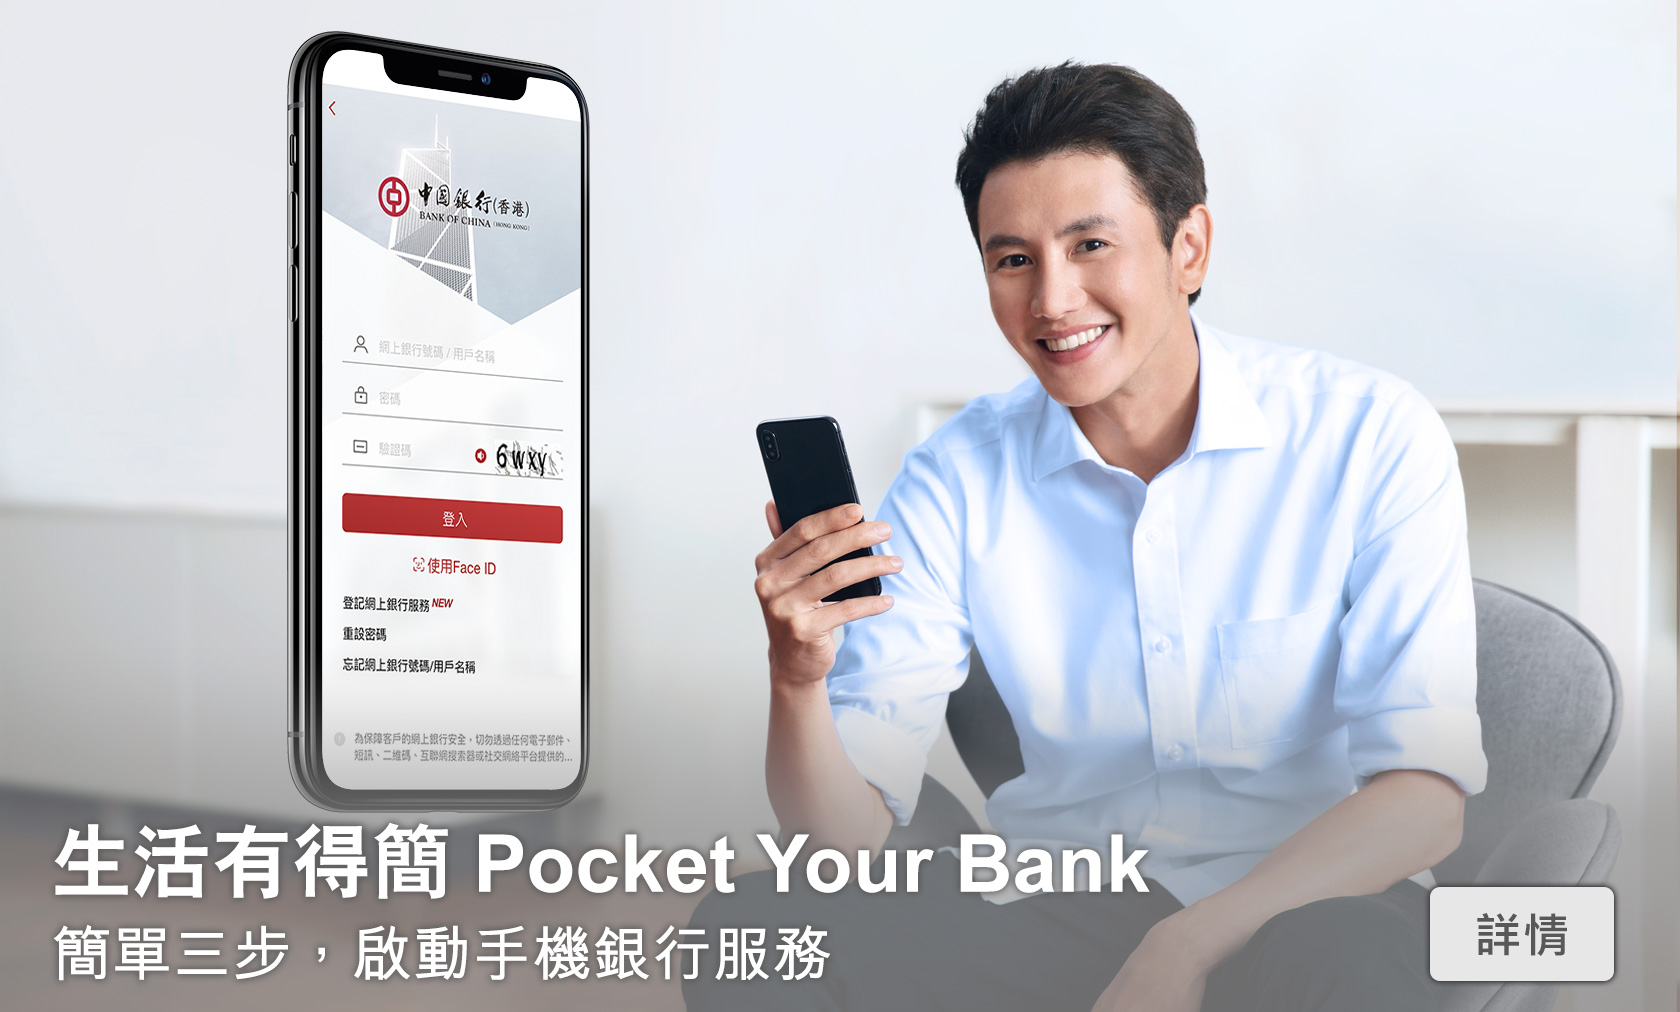 生活有得簡 Pocket Your Bank
        簡單三步，啟動手機銀行服務